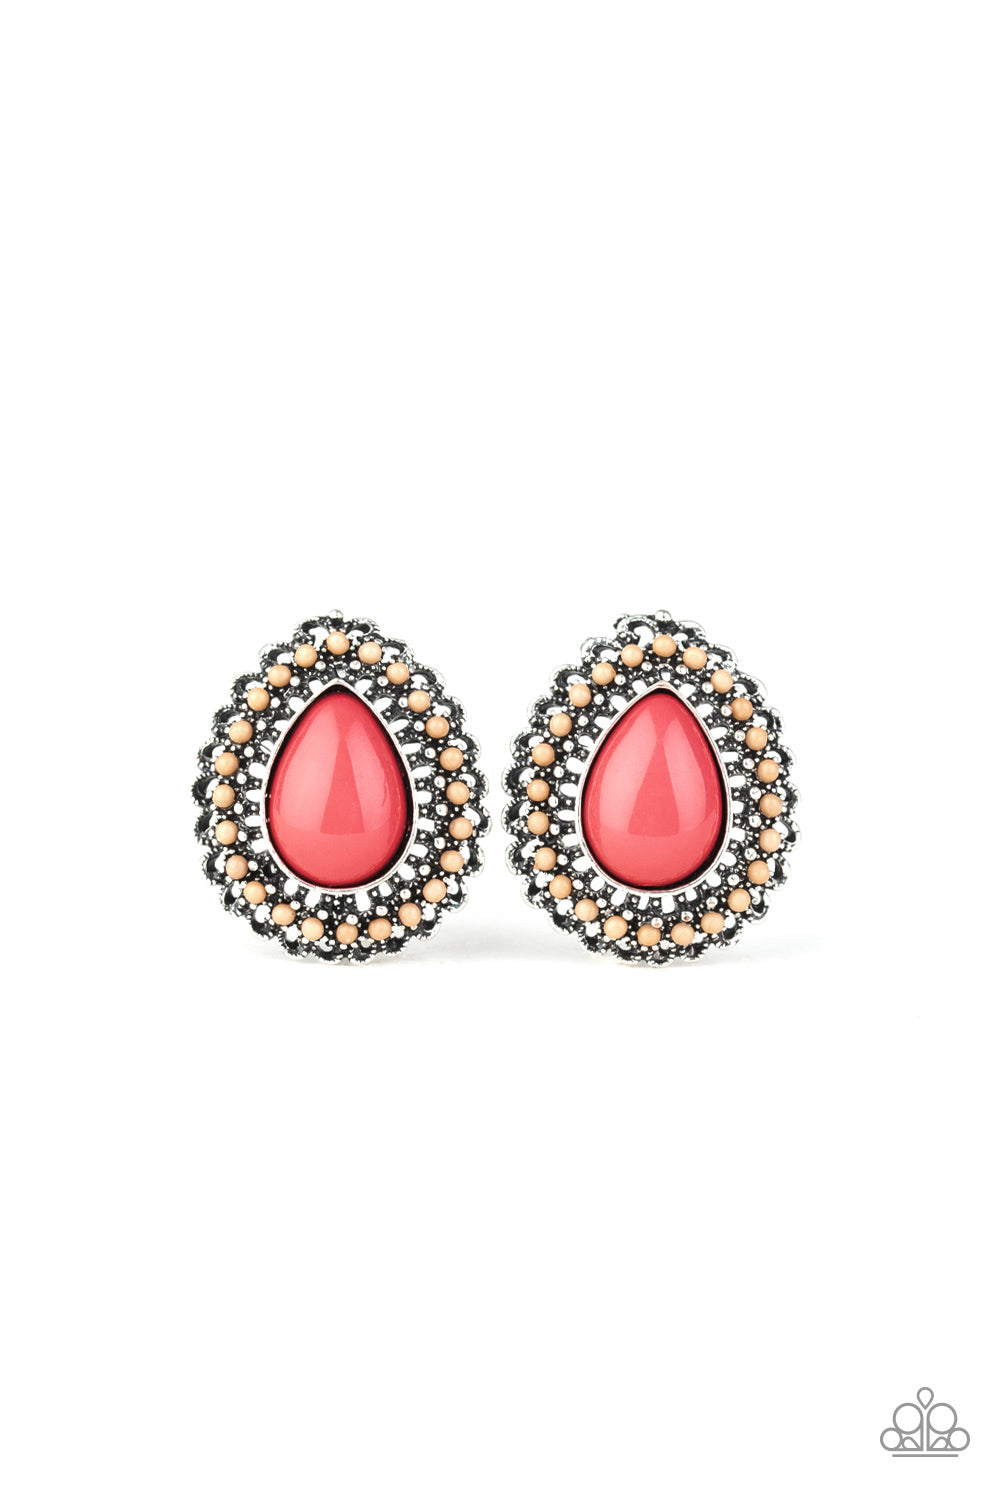 Beaded Blast Pink Paparazzi Earring Cashmere Pink Jewels - Cashmere Pink Jewels & Accessories, Cashmere Pink Jewels & Accessories - Paparazzi